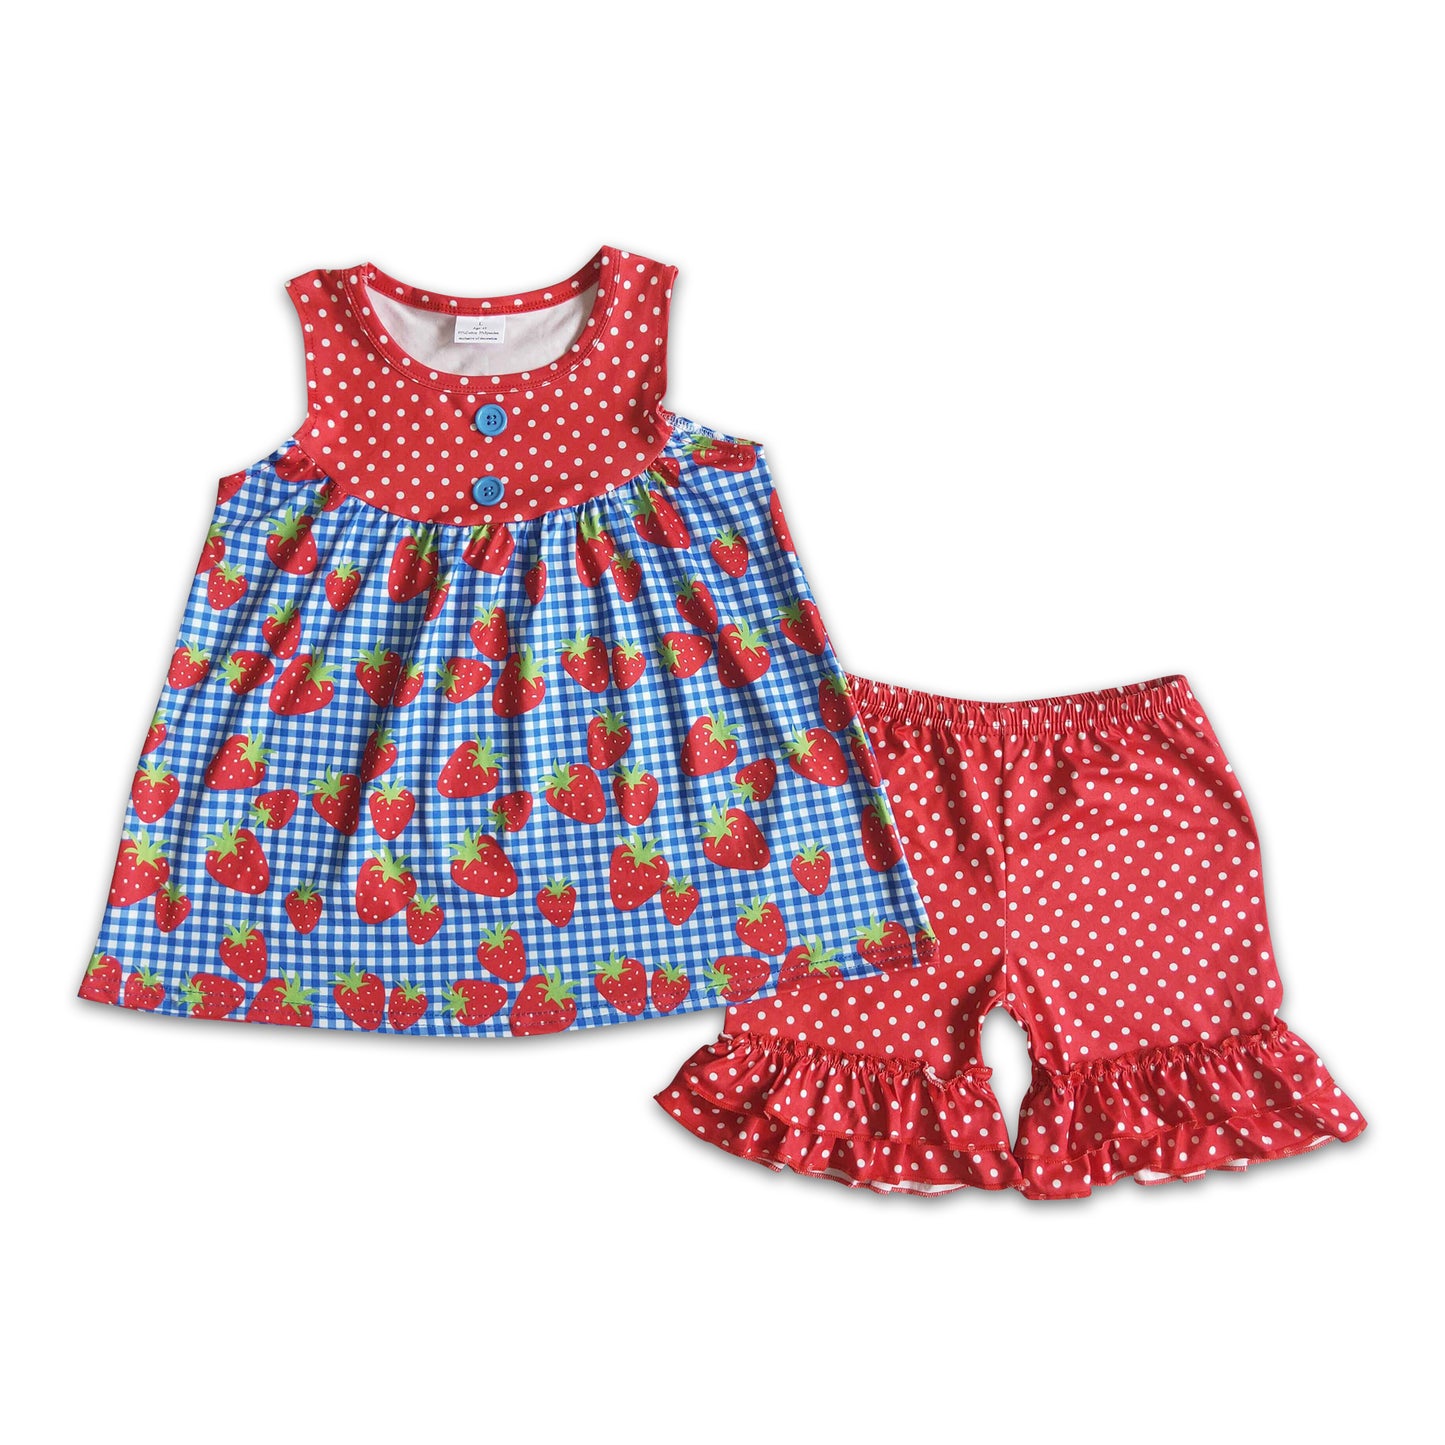 Strawberry sleeveless shirt polka dots shorts girls summer clothing